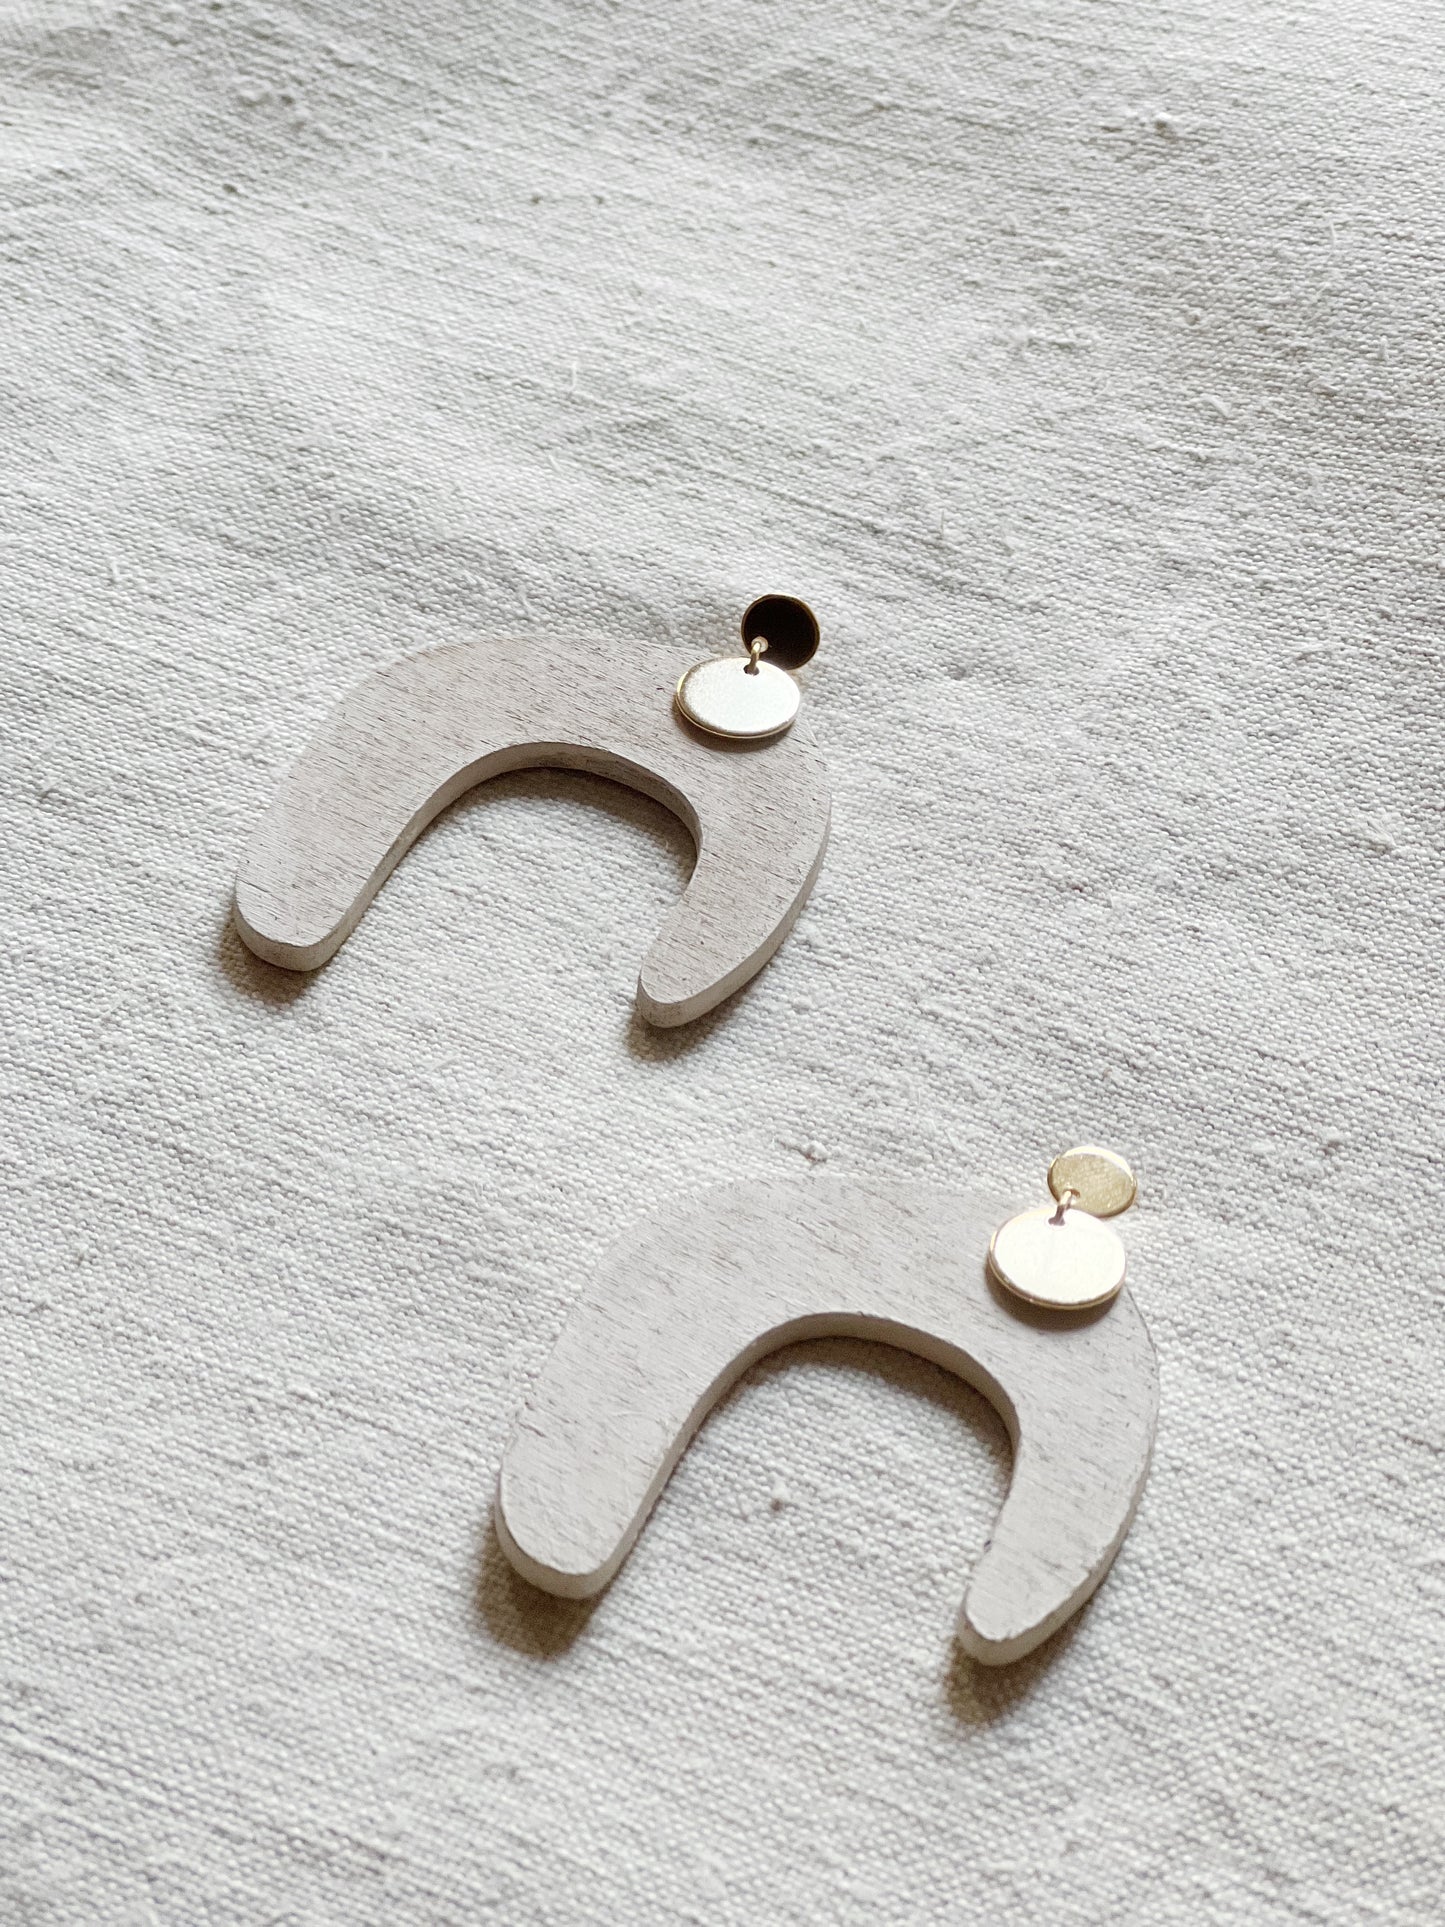 Sinai earrings in off-white colour